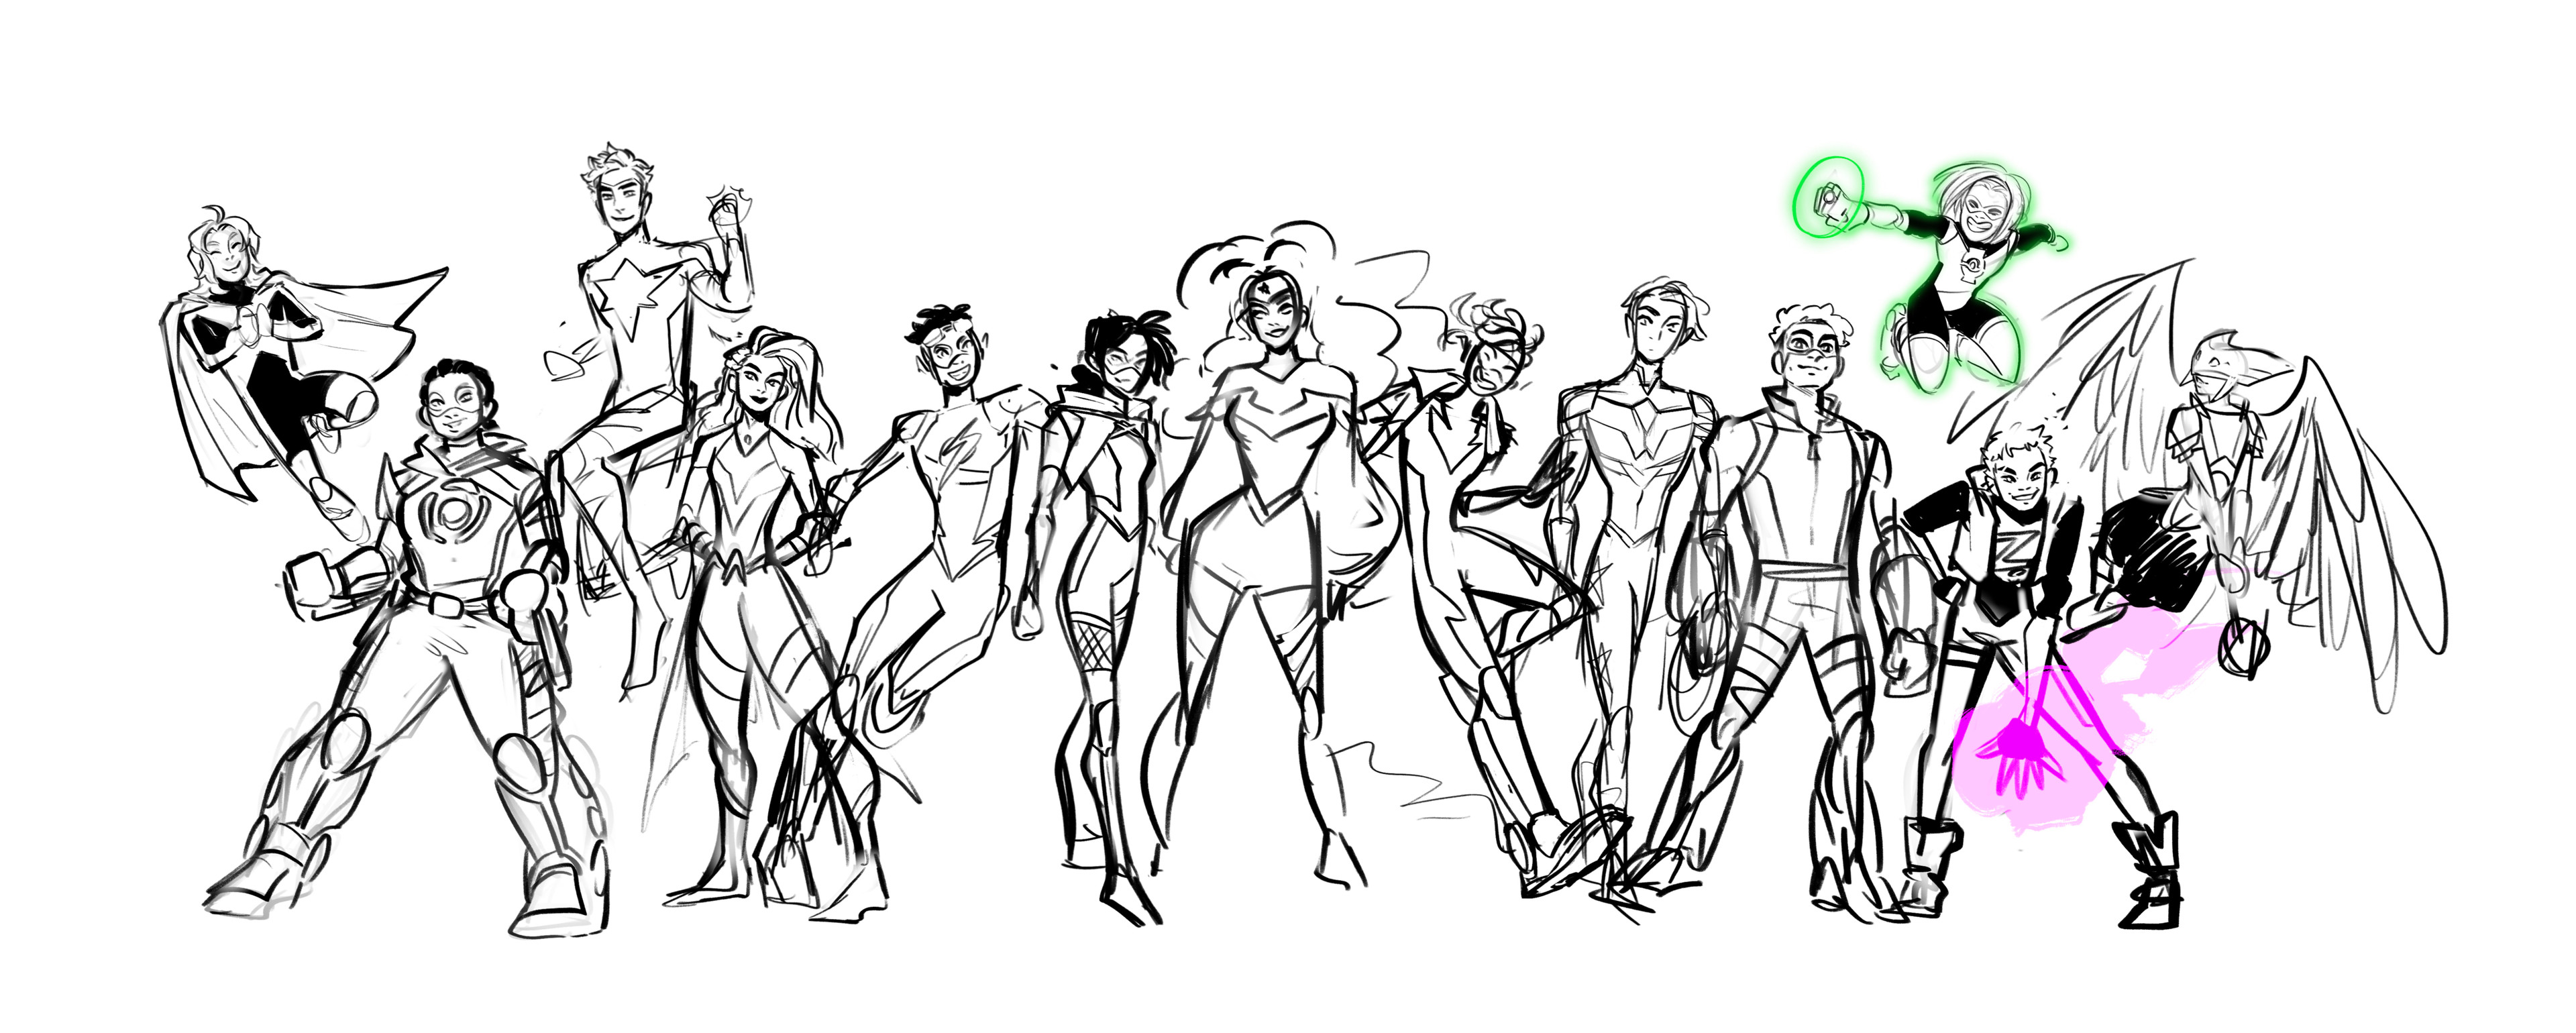 sketch of the whole new teen superhero teams. I'm a sucker for team drama + super powers